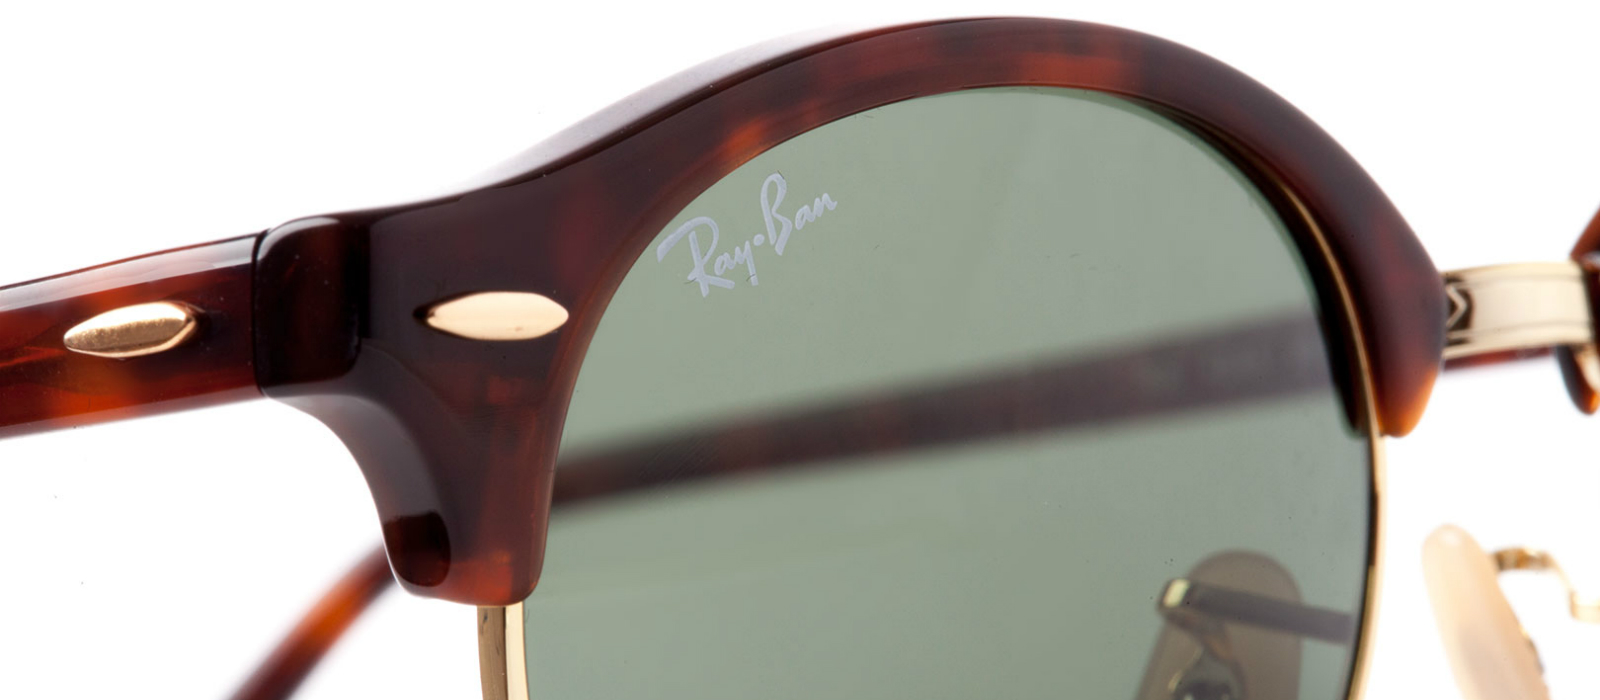 spreiding Zweet verzameling Hoe herken je een echte en neppe Ray-Ban zonnebril? | Lentiamo